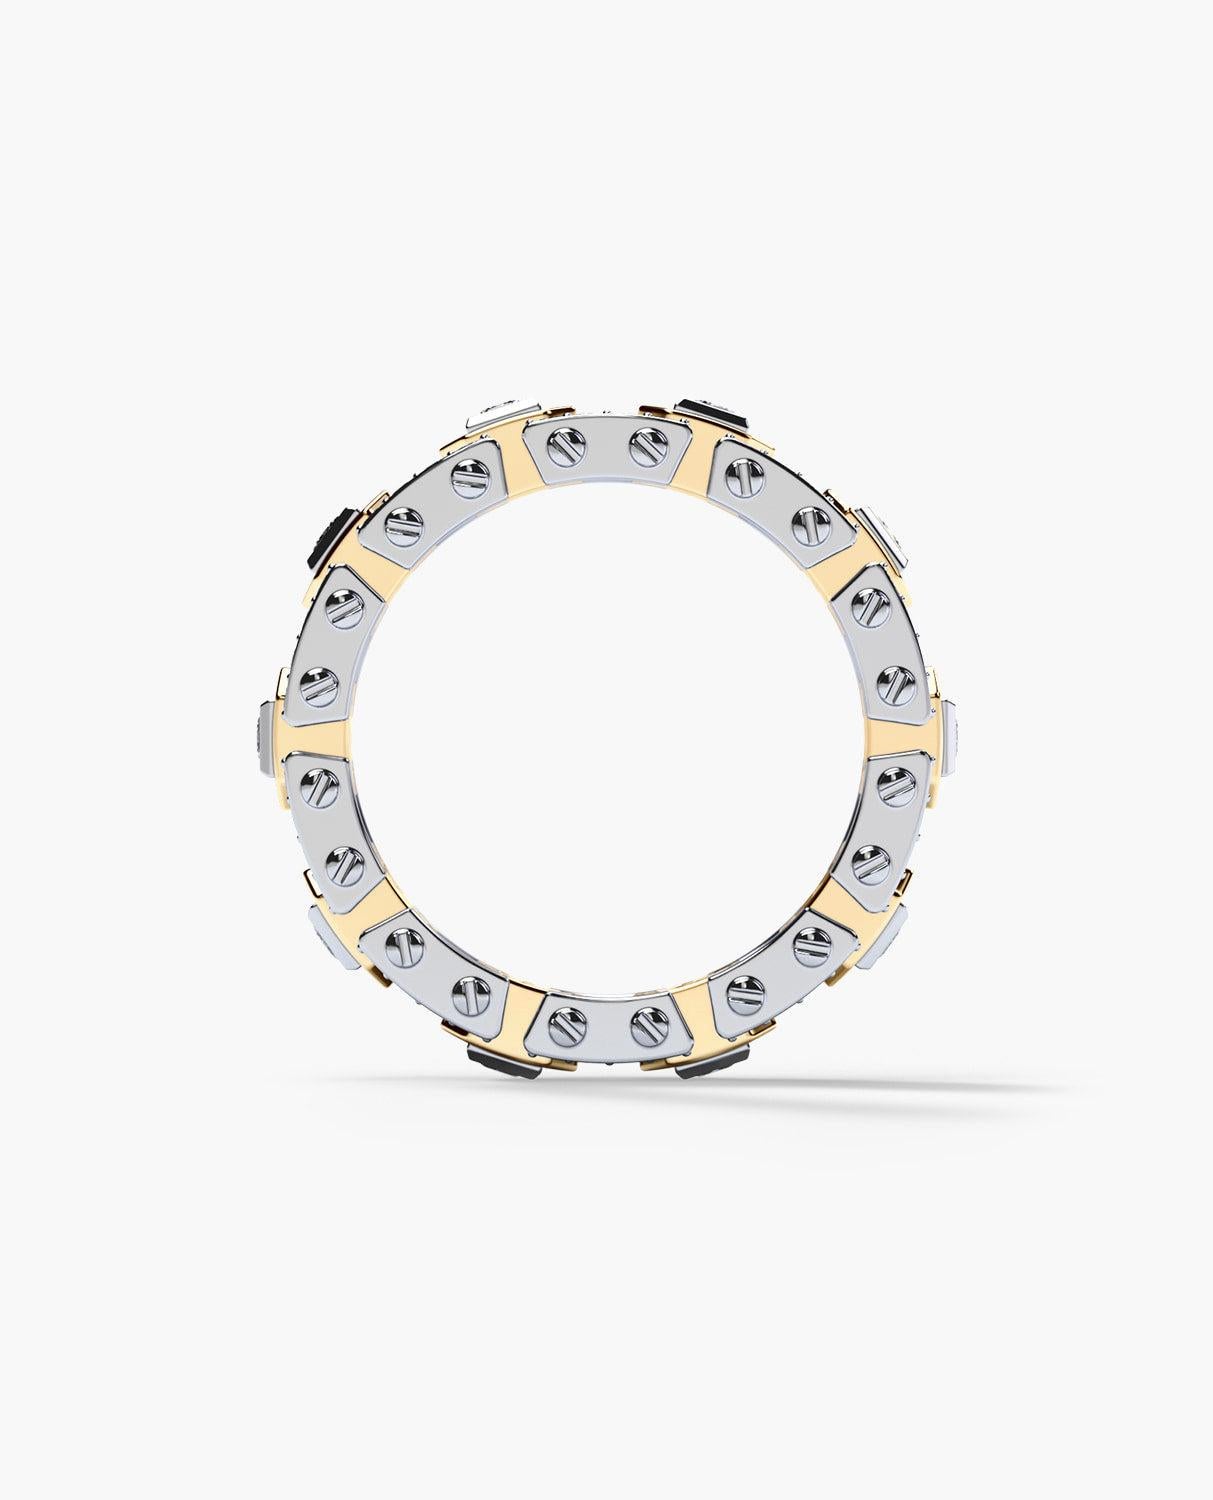 Princess Cut LA PAZ 14k White & Yellow Gold Ring with 1.20ct Diamonds For Sale